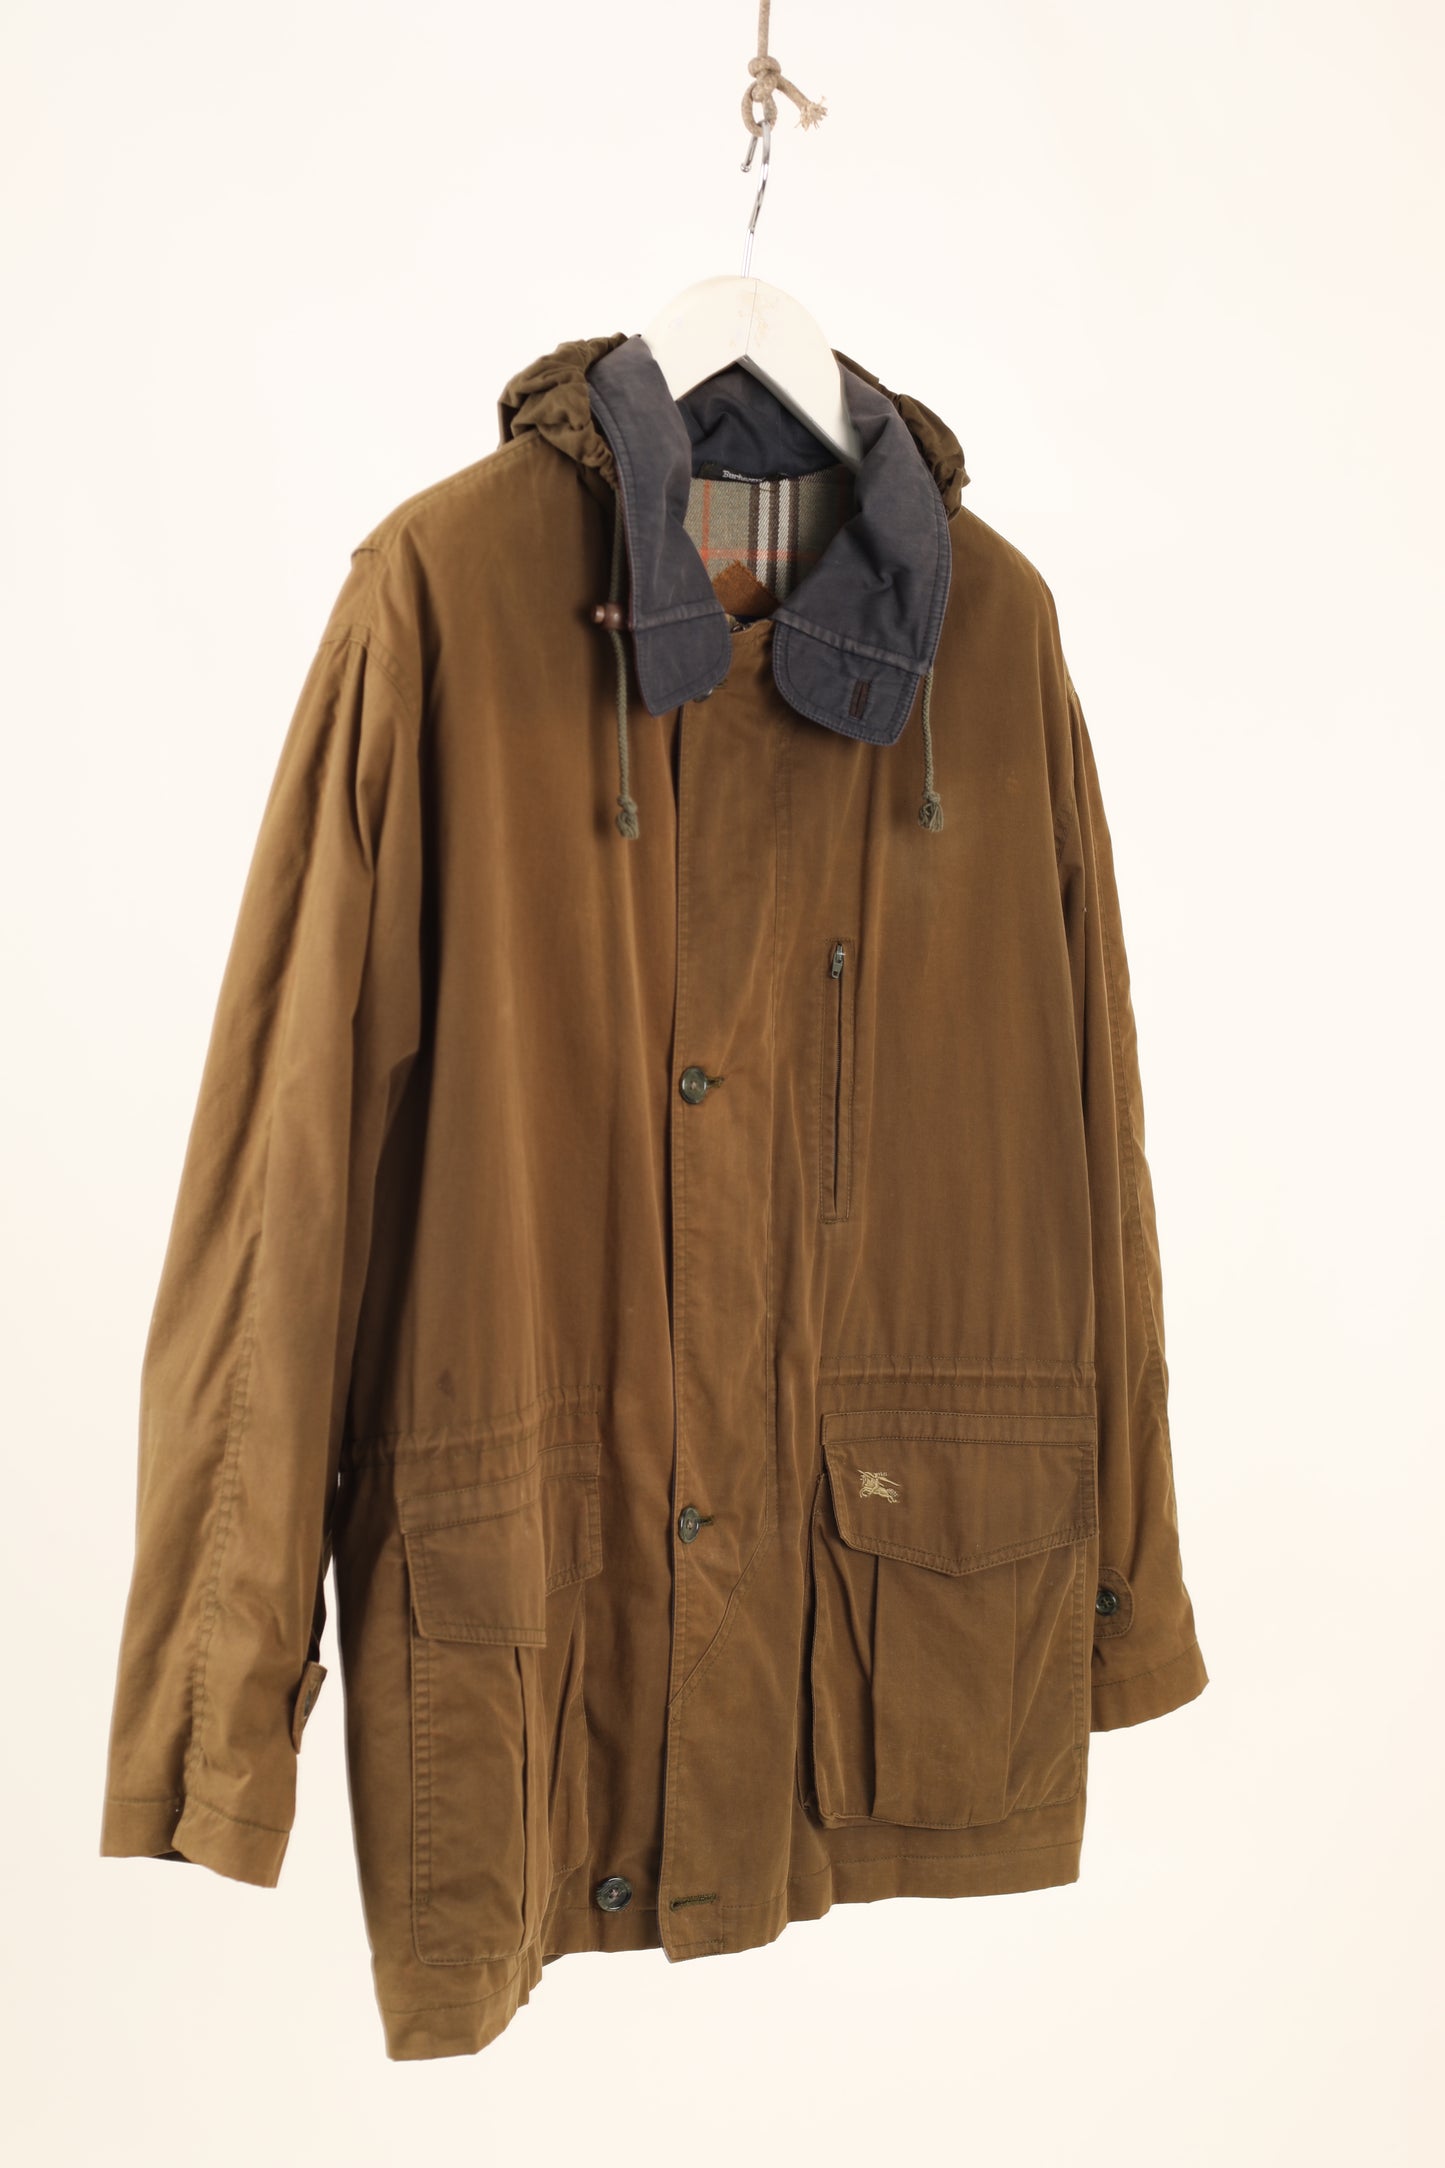 1992 Burberry Prorsum walking jacket